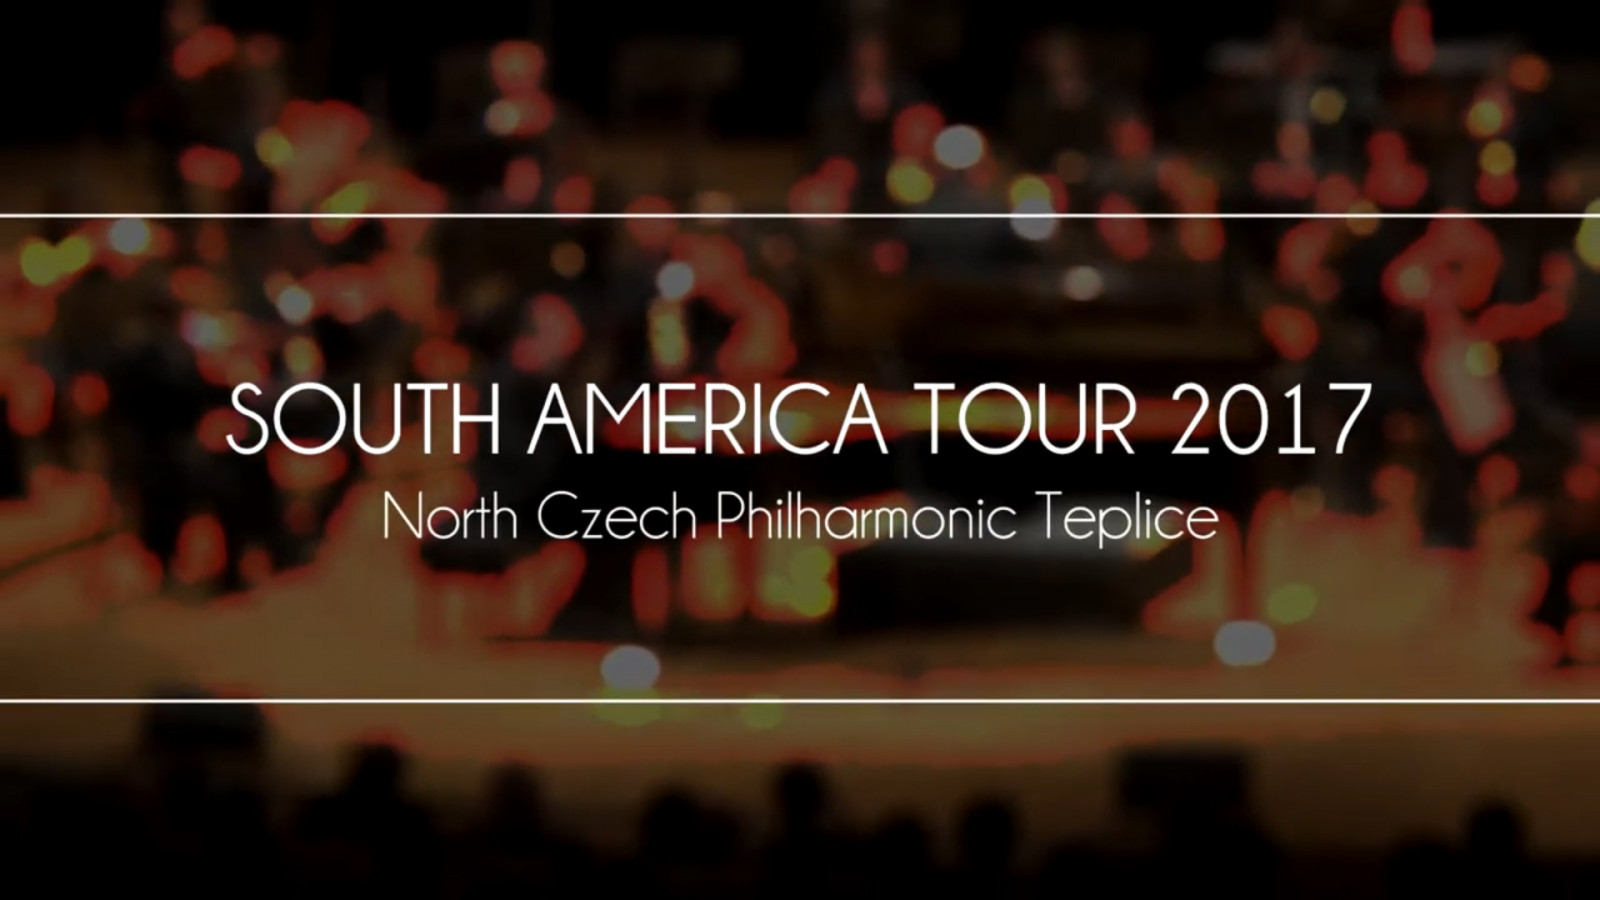 South America tour 2017